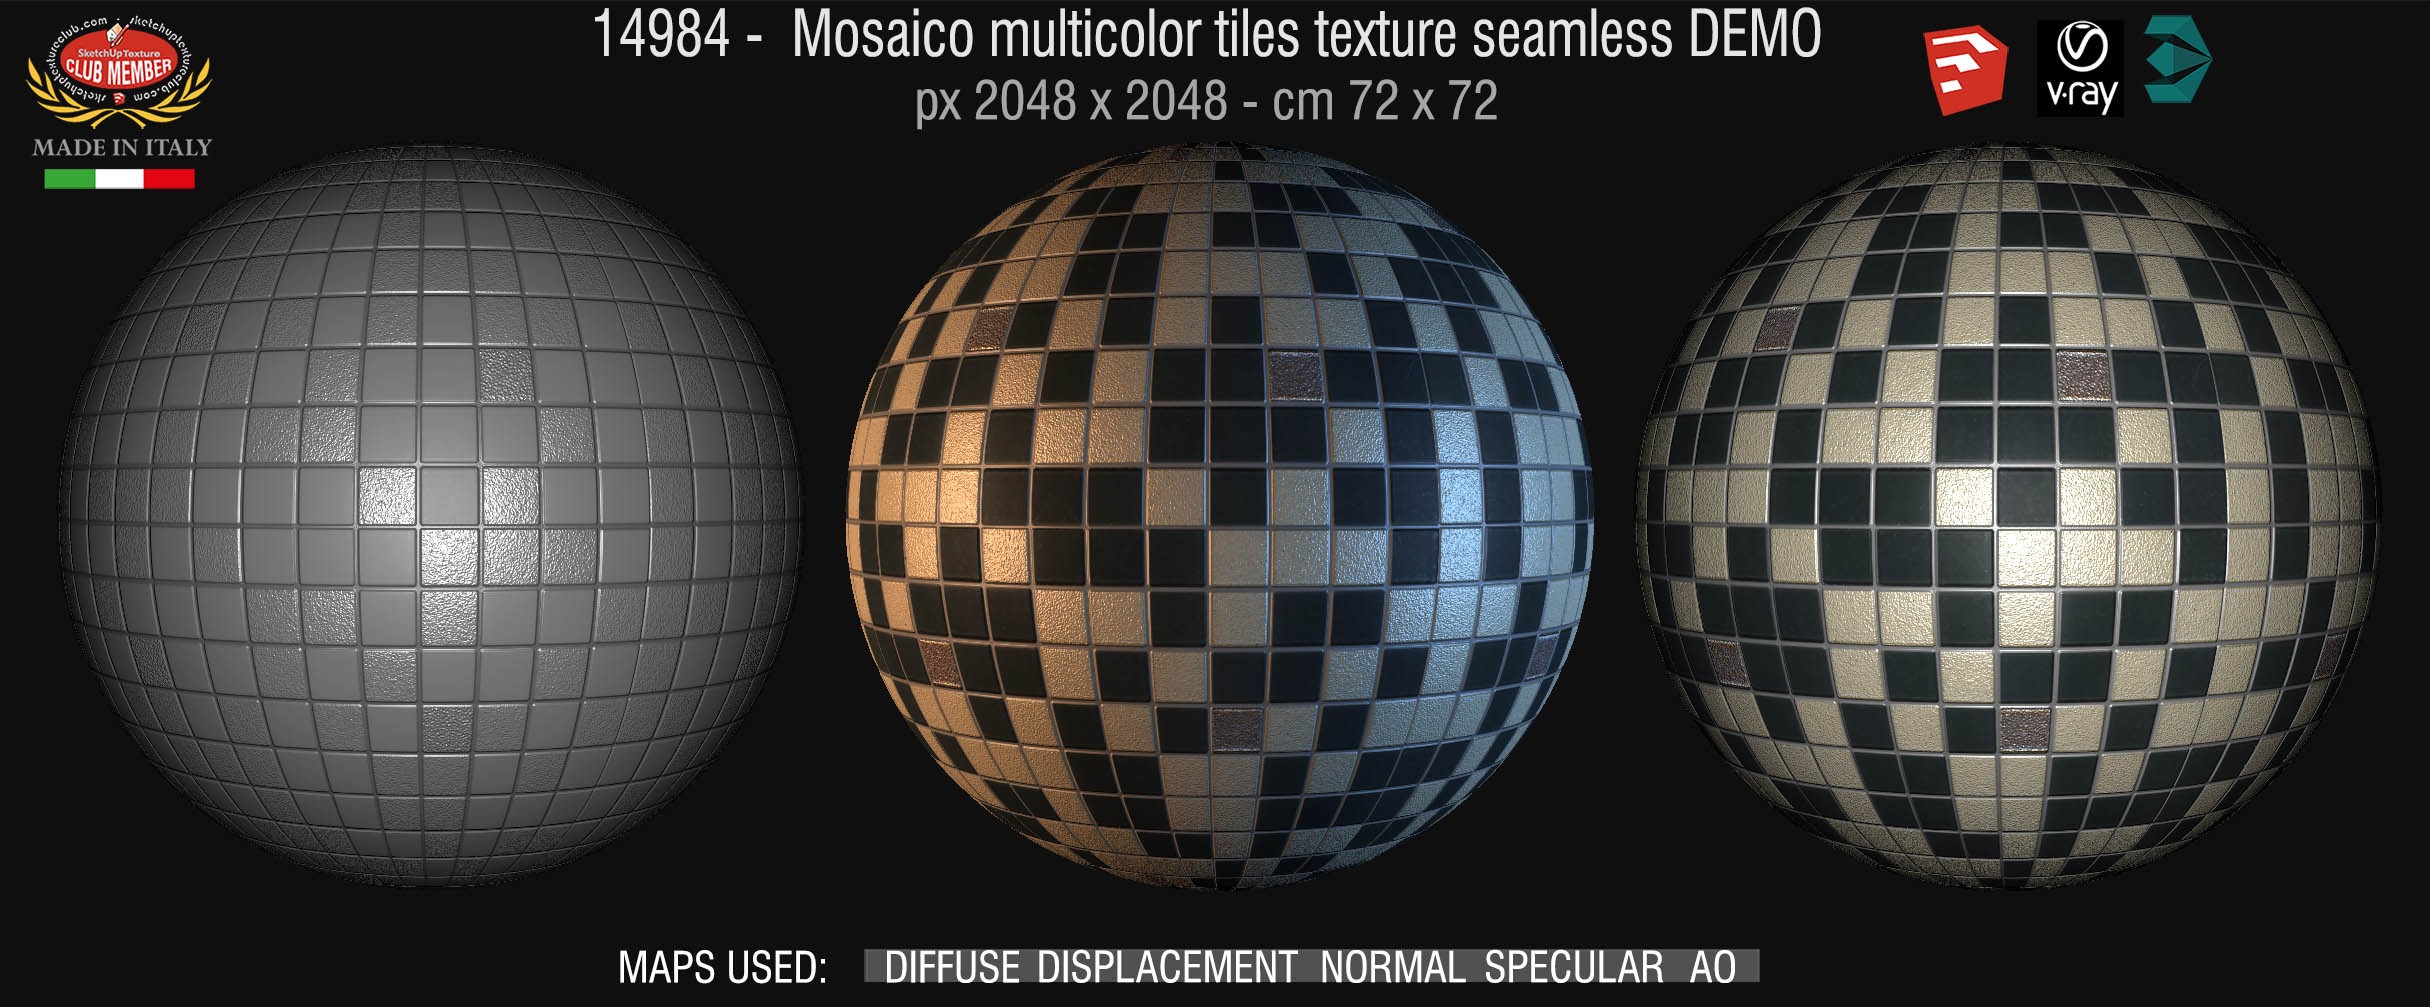 14984 Mosaico multicolor tiles texture seamless + maps DEMO